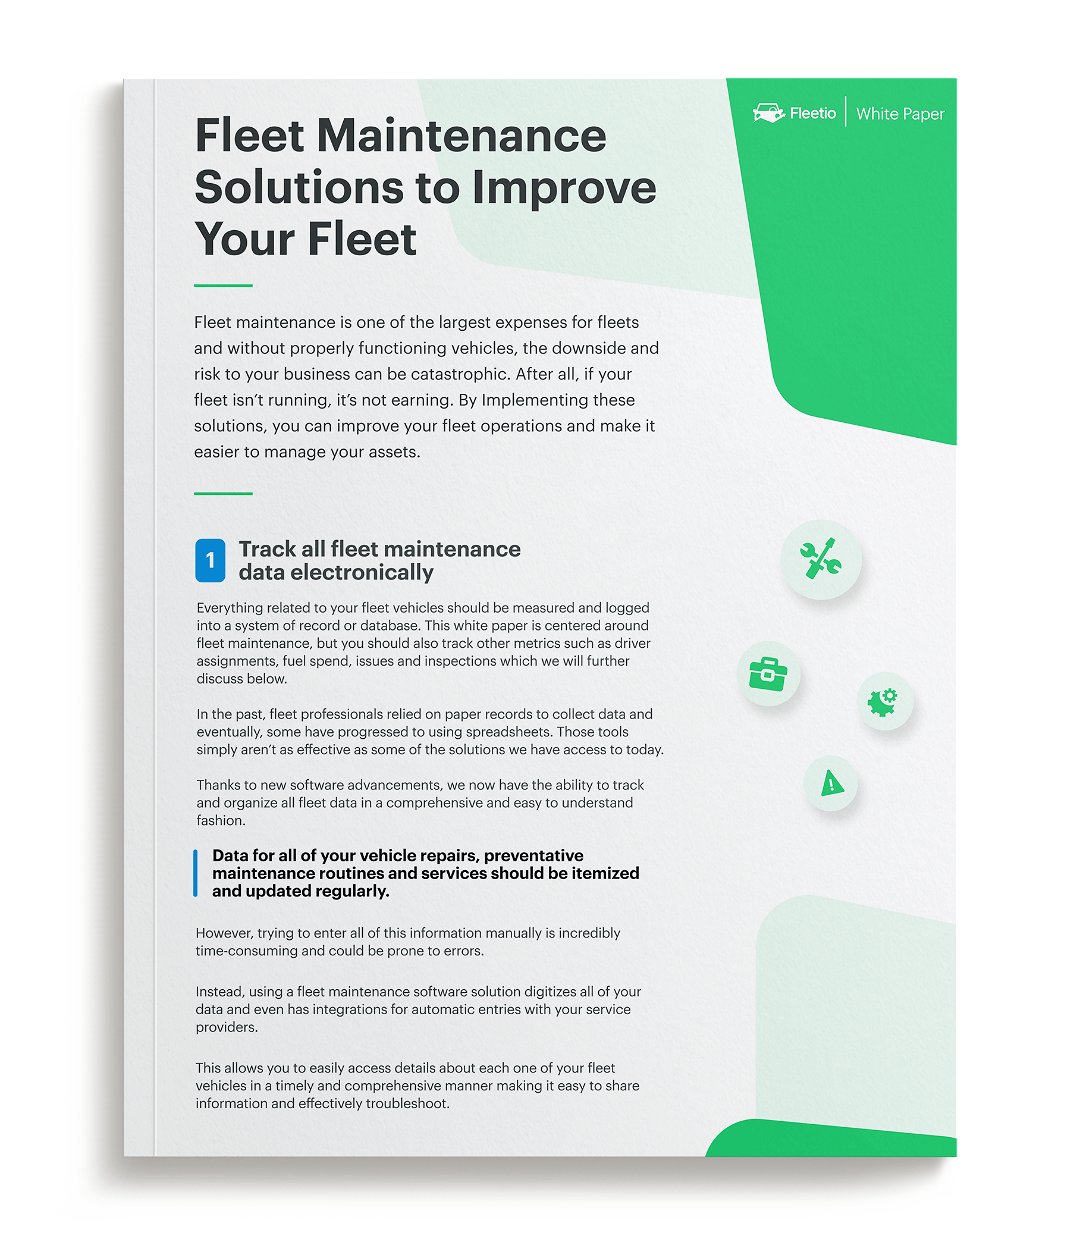 Fleet Maintenance Solutions to Improve Your Fleet